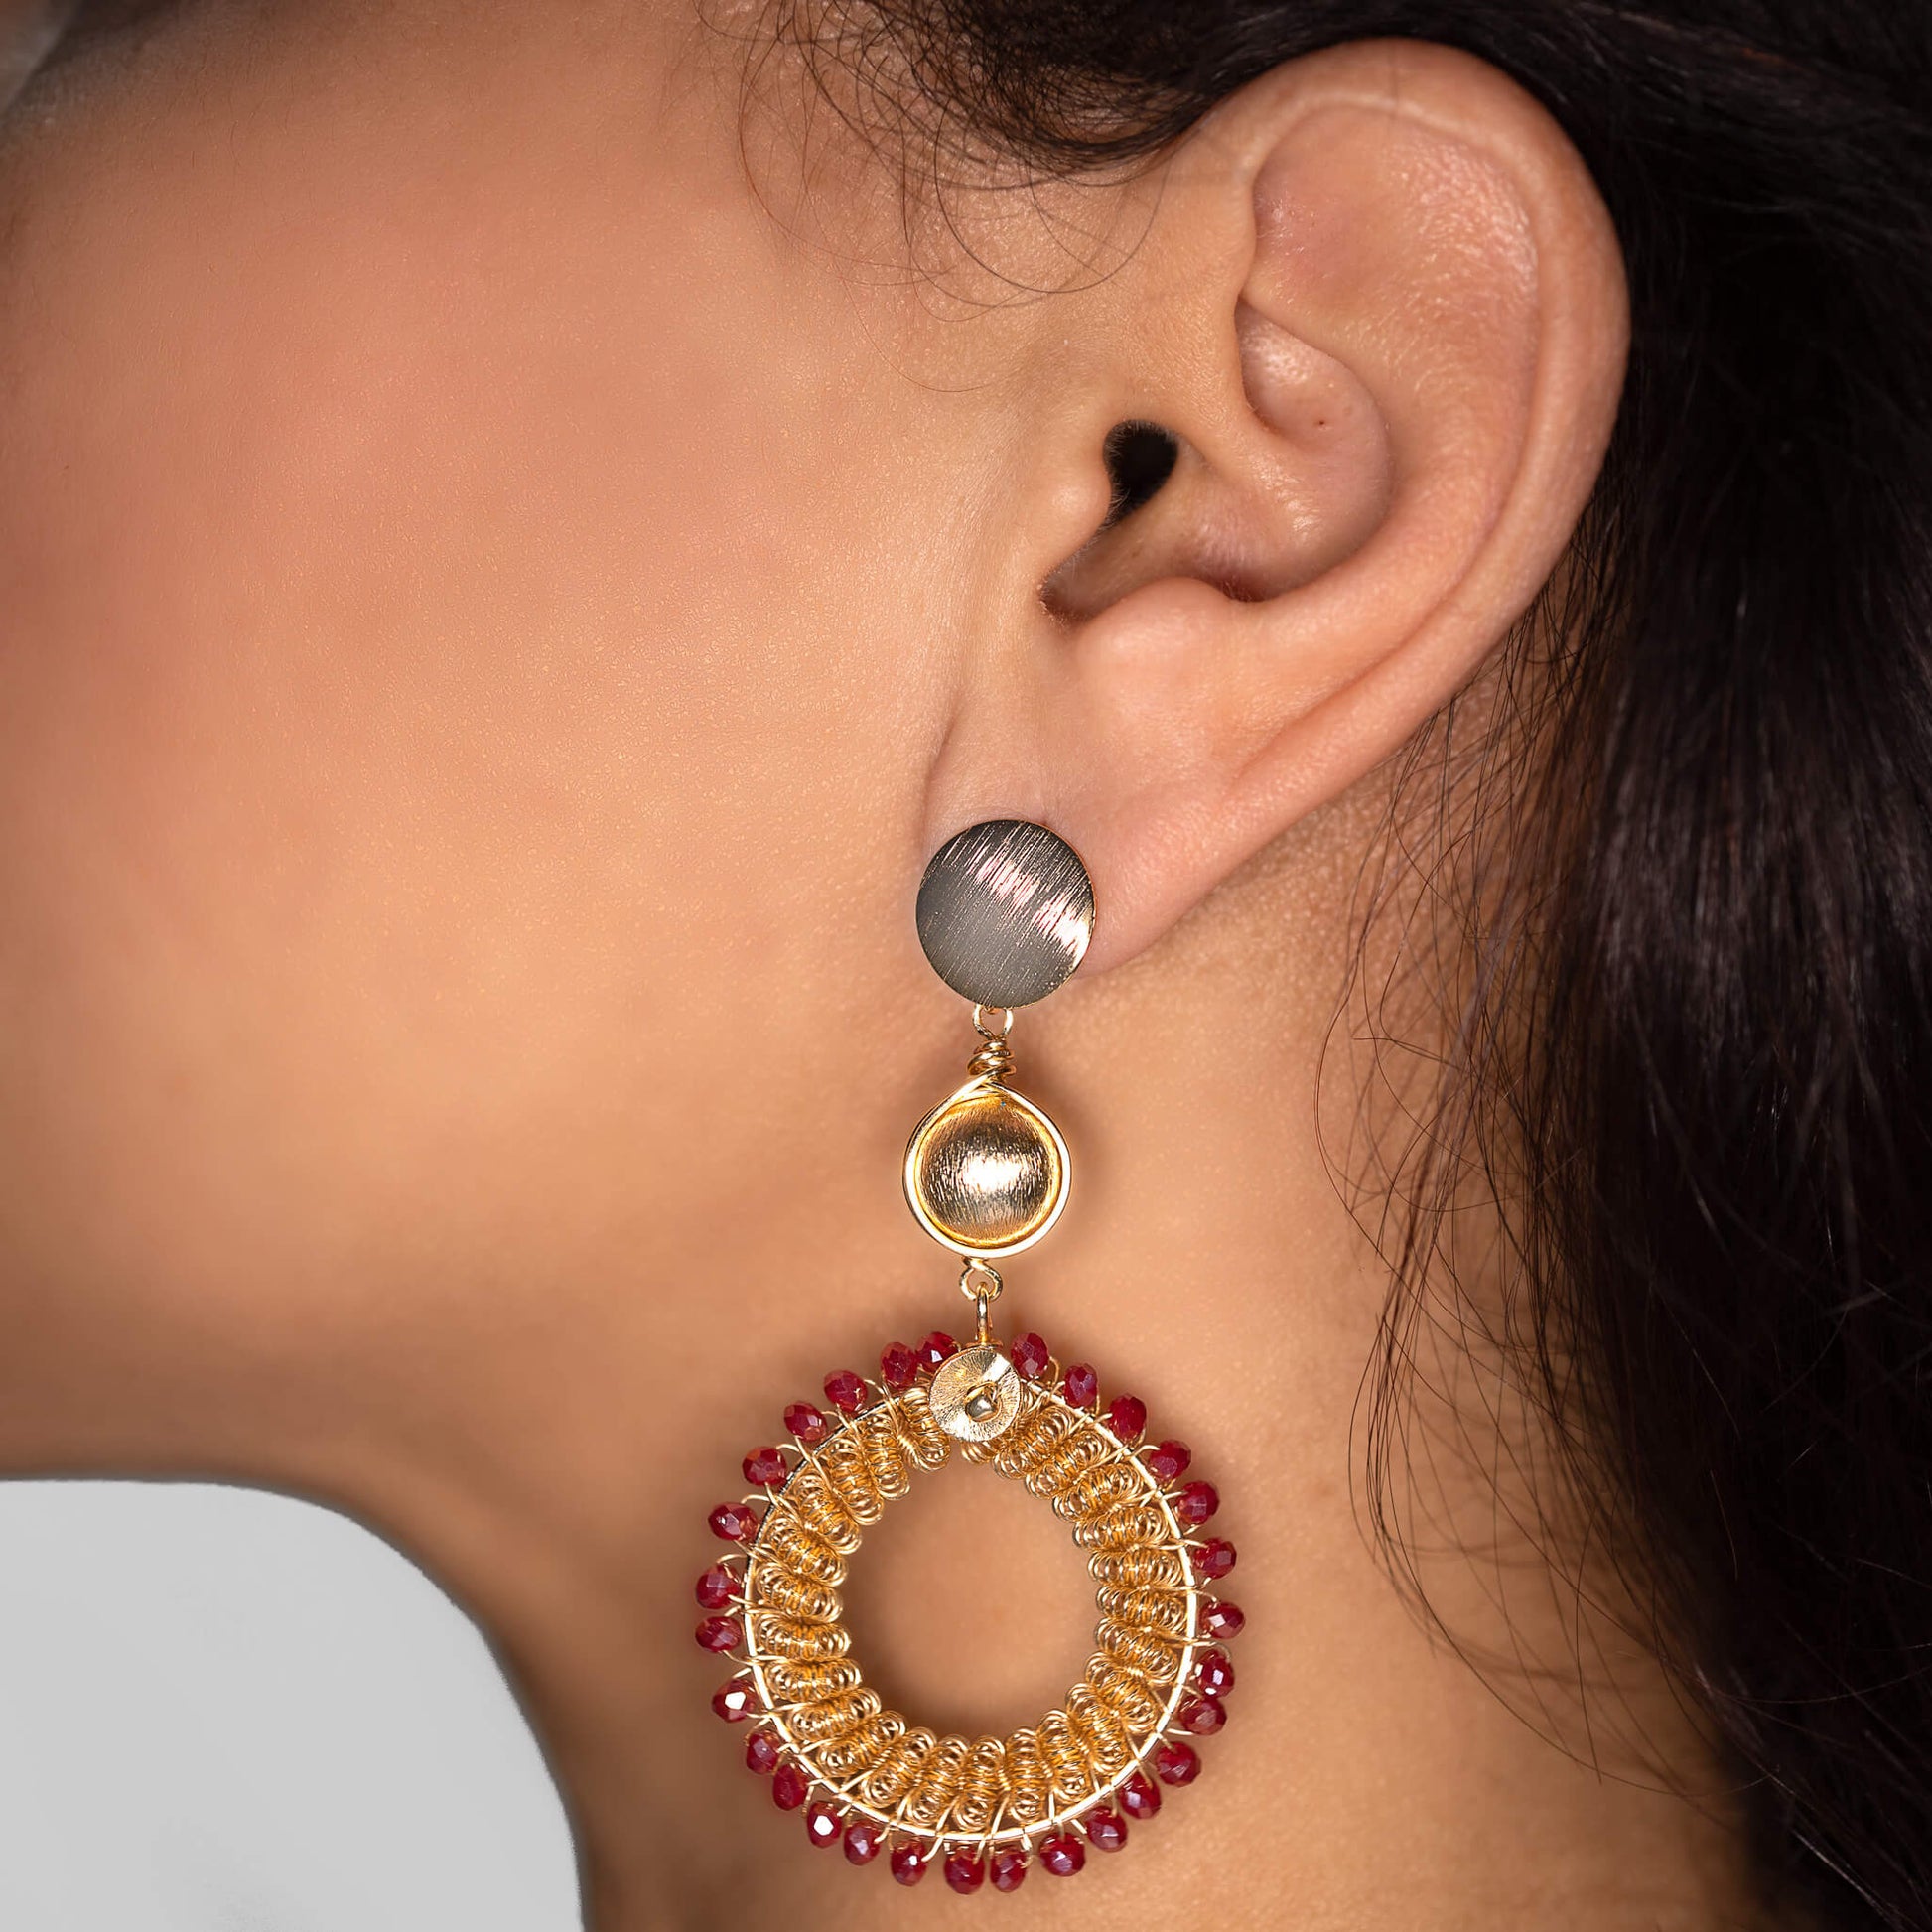 Jalsa Earrings on a model. Gold Color Earrings with Fushia Crystal Seed Beads. Stud Earrings. Metal Frame & Wire Wrapped Earrings